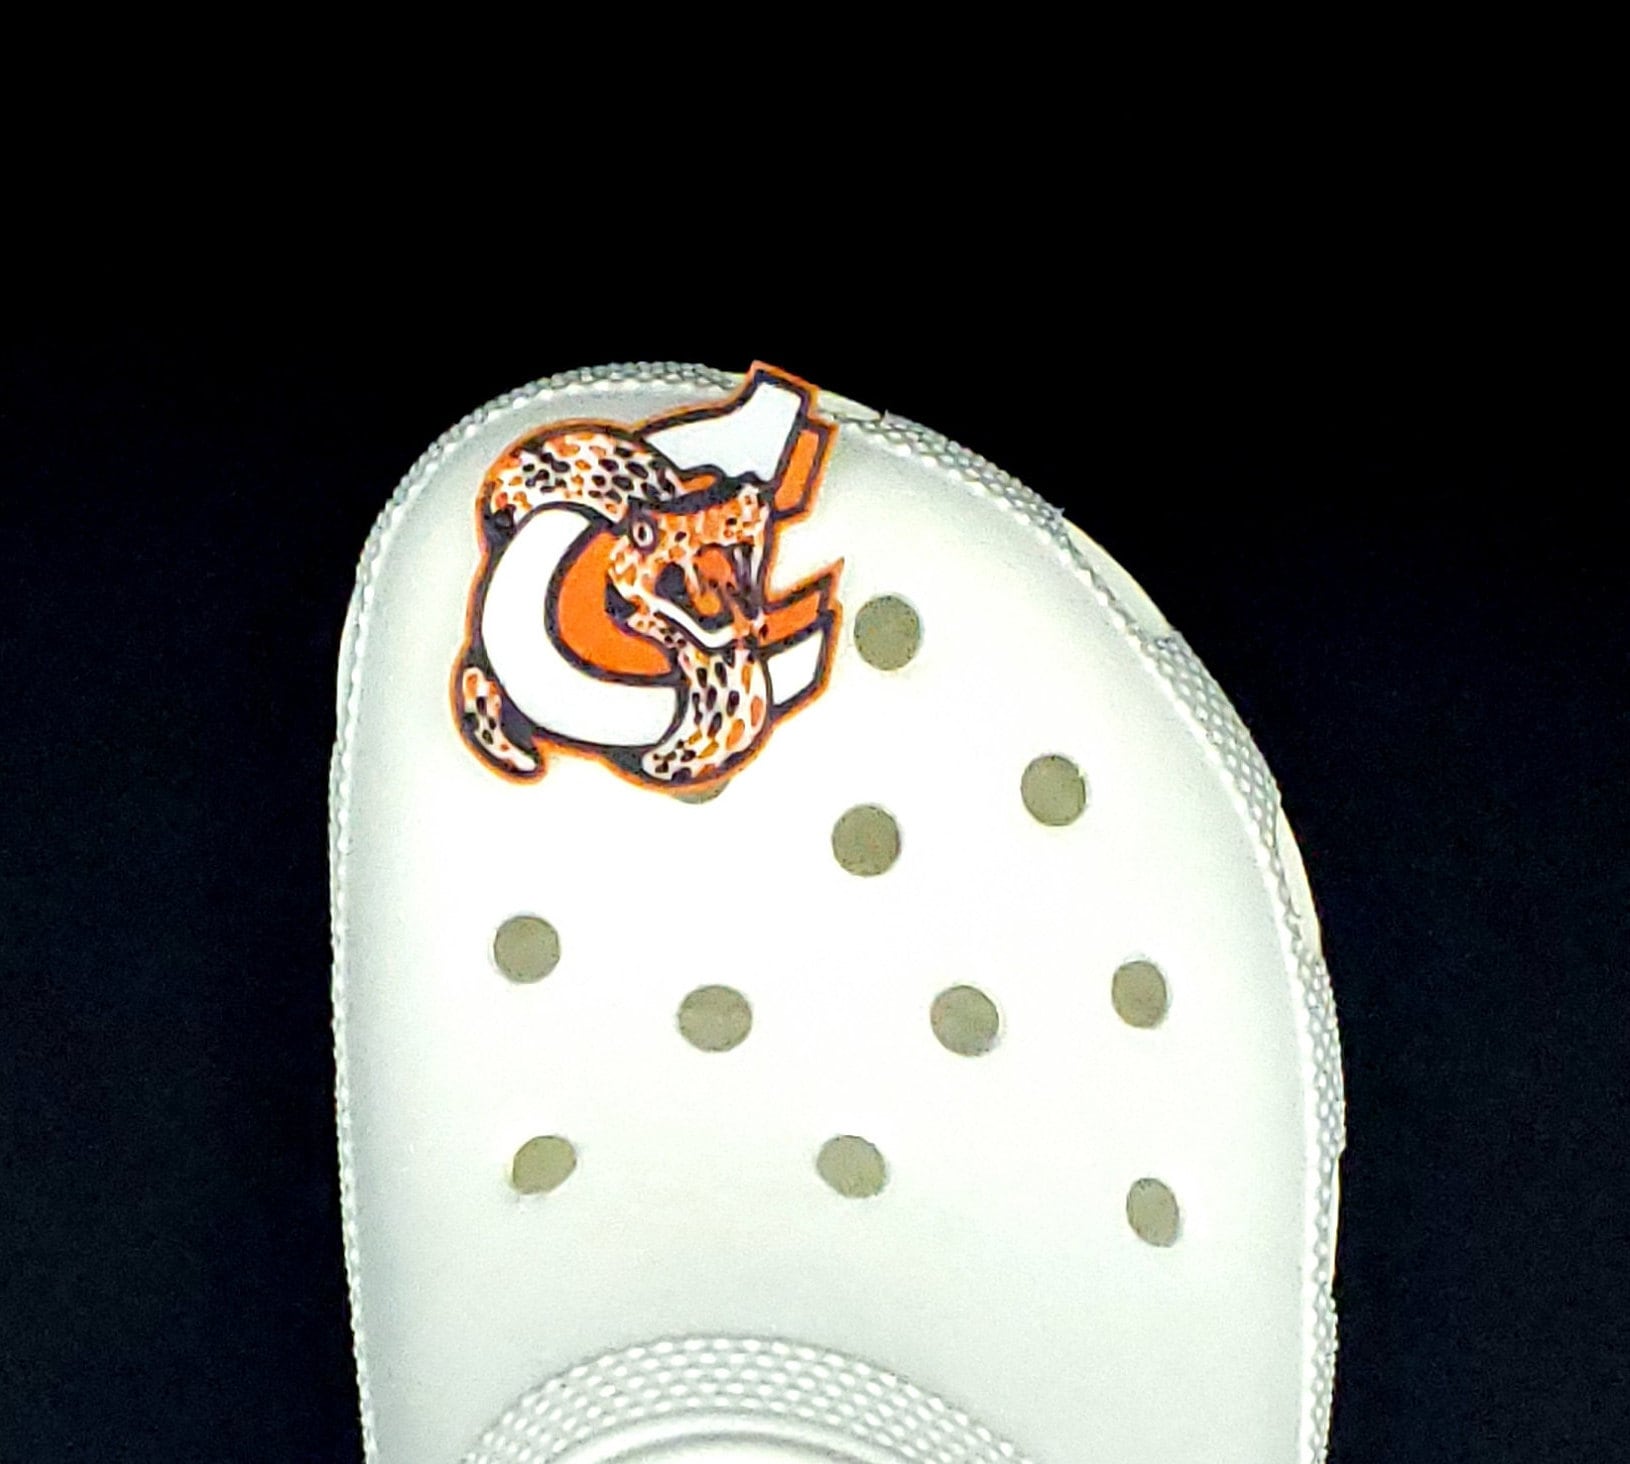 Bulk Custom Croc Charms, Company Logo, School Mascots, Fundraisers